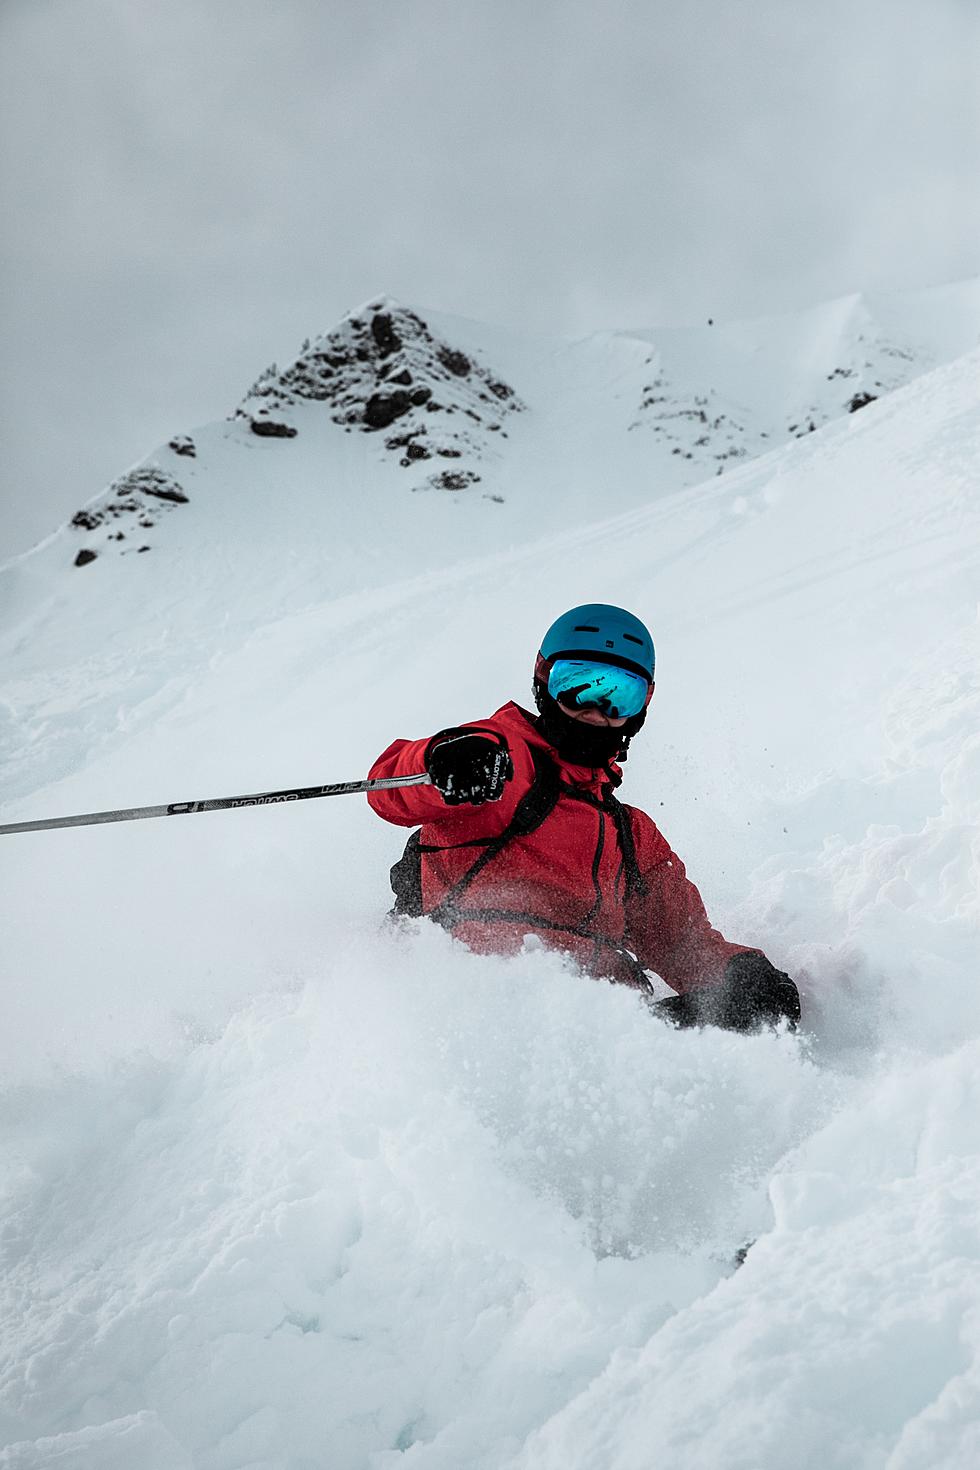 Recent Snowfall Helps Montana Ski Resorts Before Holiday Rush